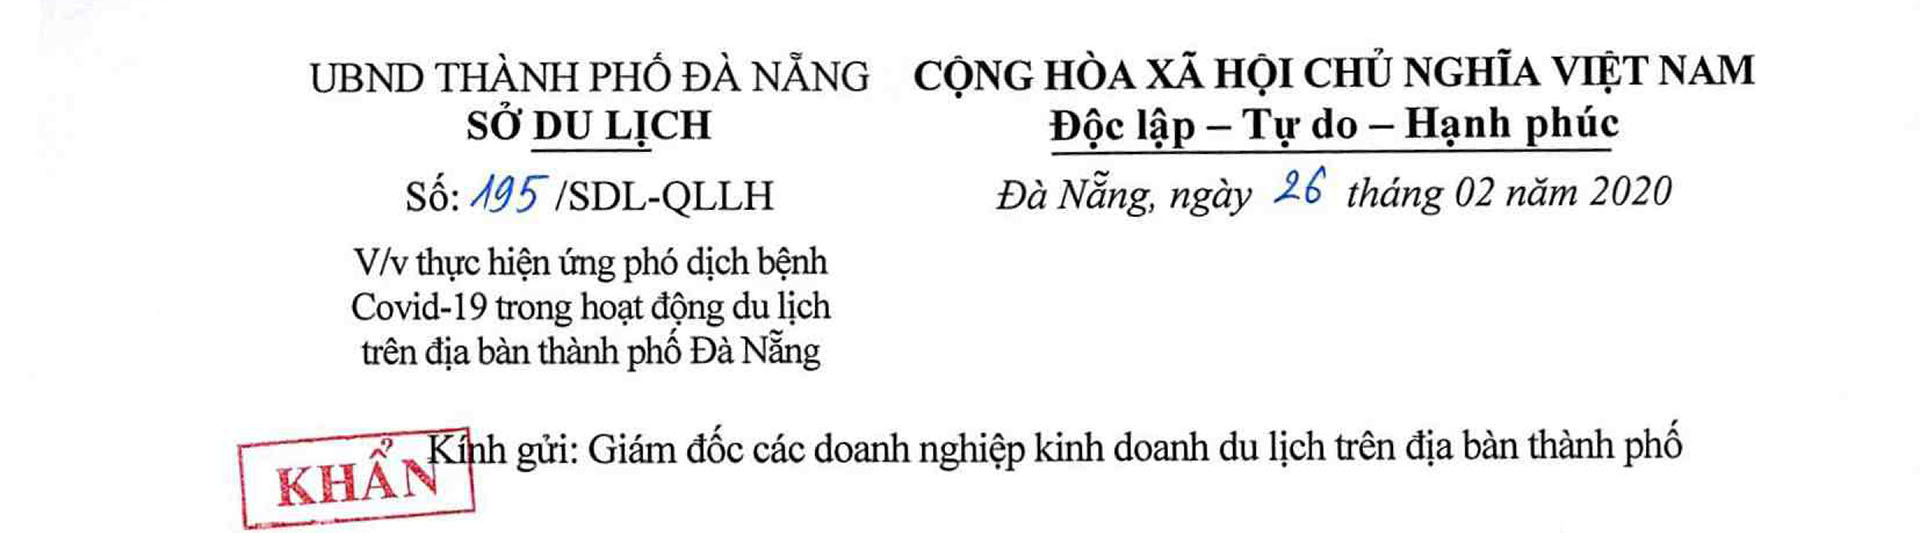 Thuc Hien Ung Pho Dich Benh Covid 19 Trong Hoat Dong Du Lich Tren Dia Ban Thanh Pho Da Nang